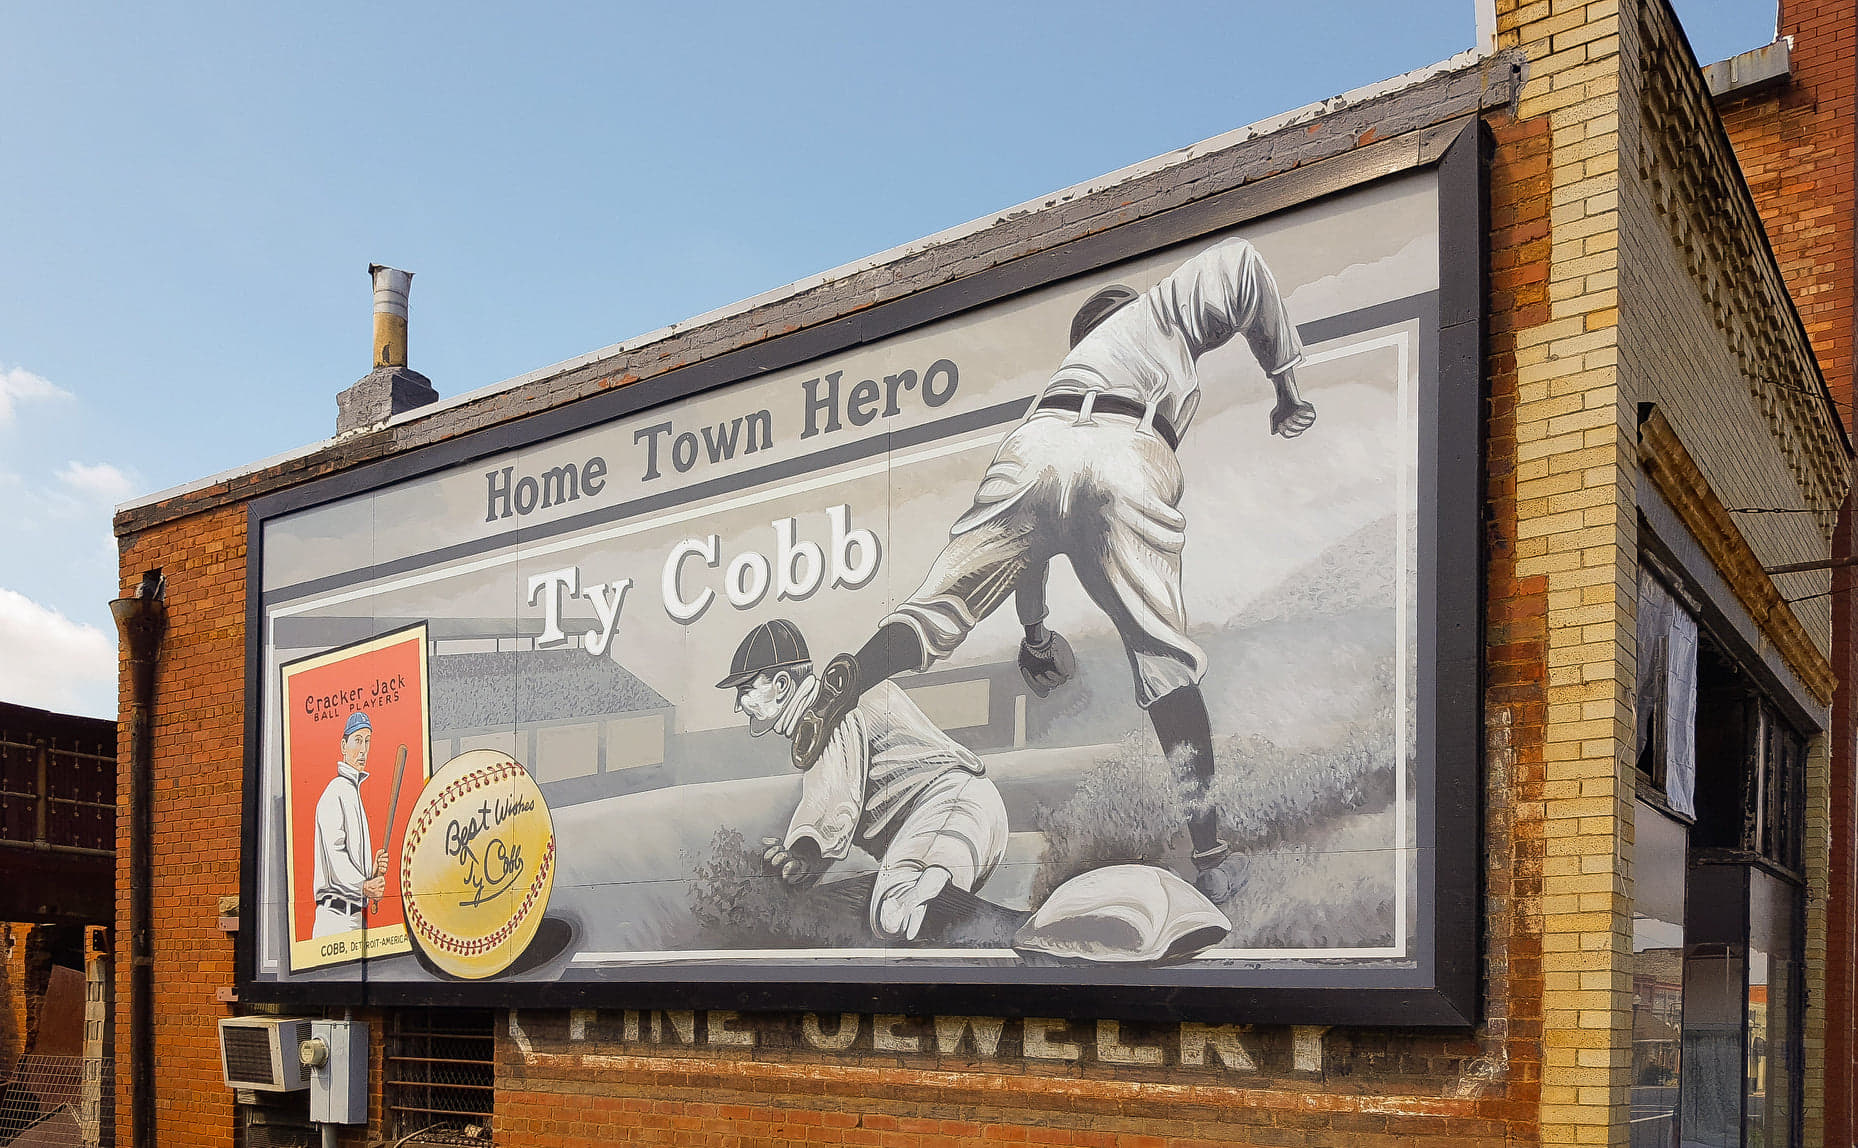 Ty Cobb and 'Shoeless' Joe Jackson, American baseball players Wall